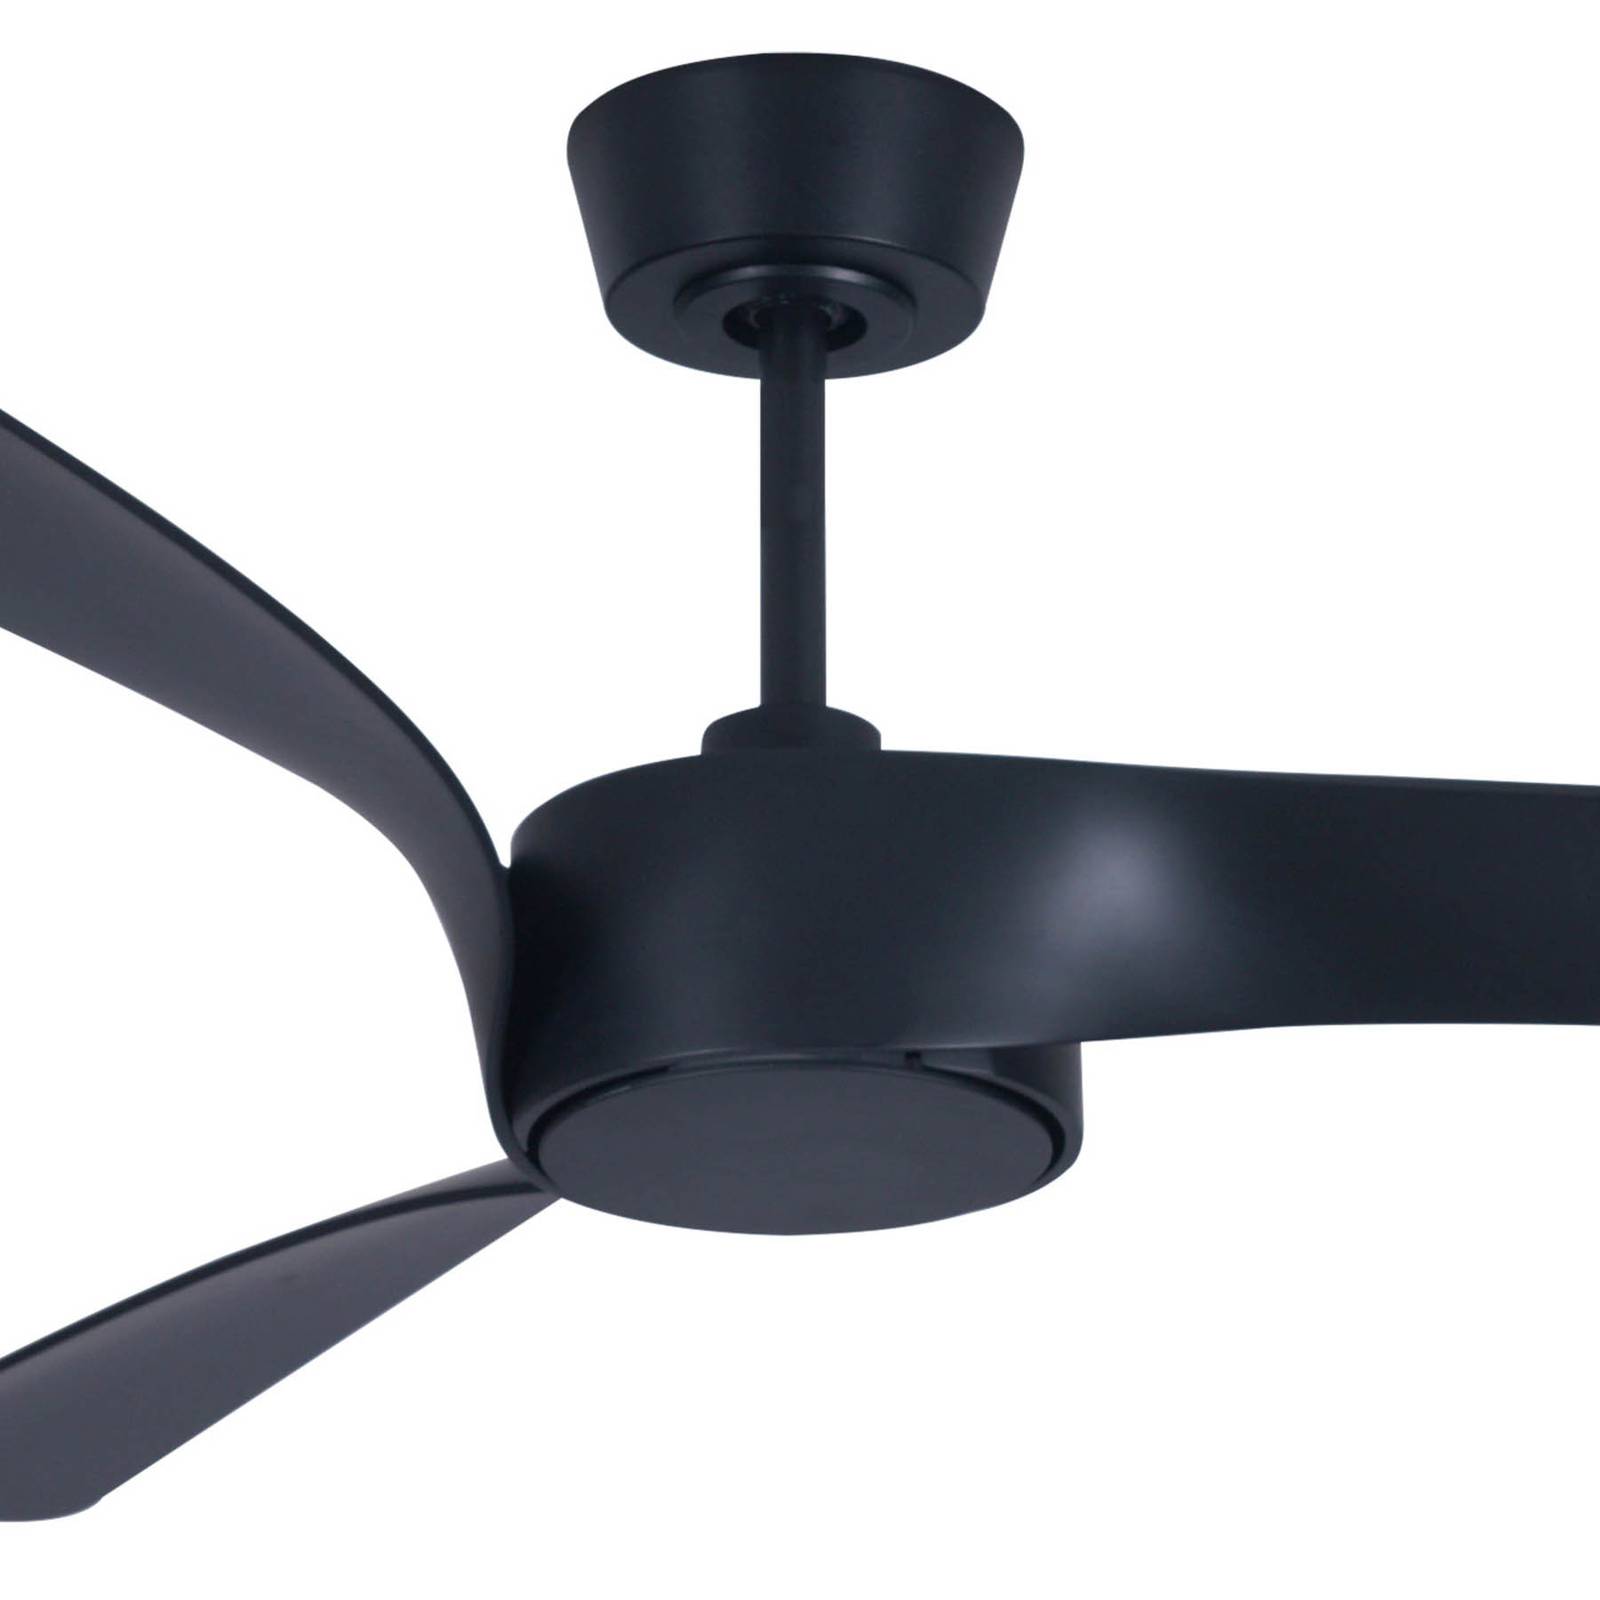 Line LED ceiling fan, black